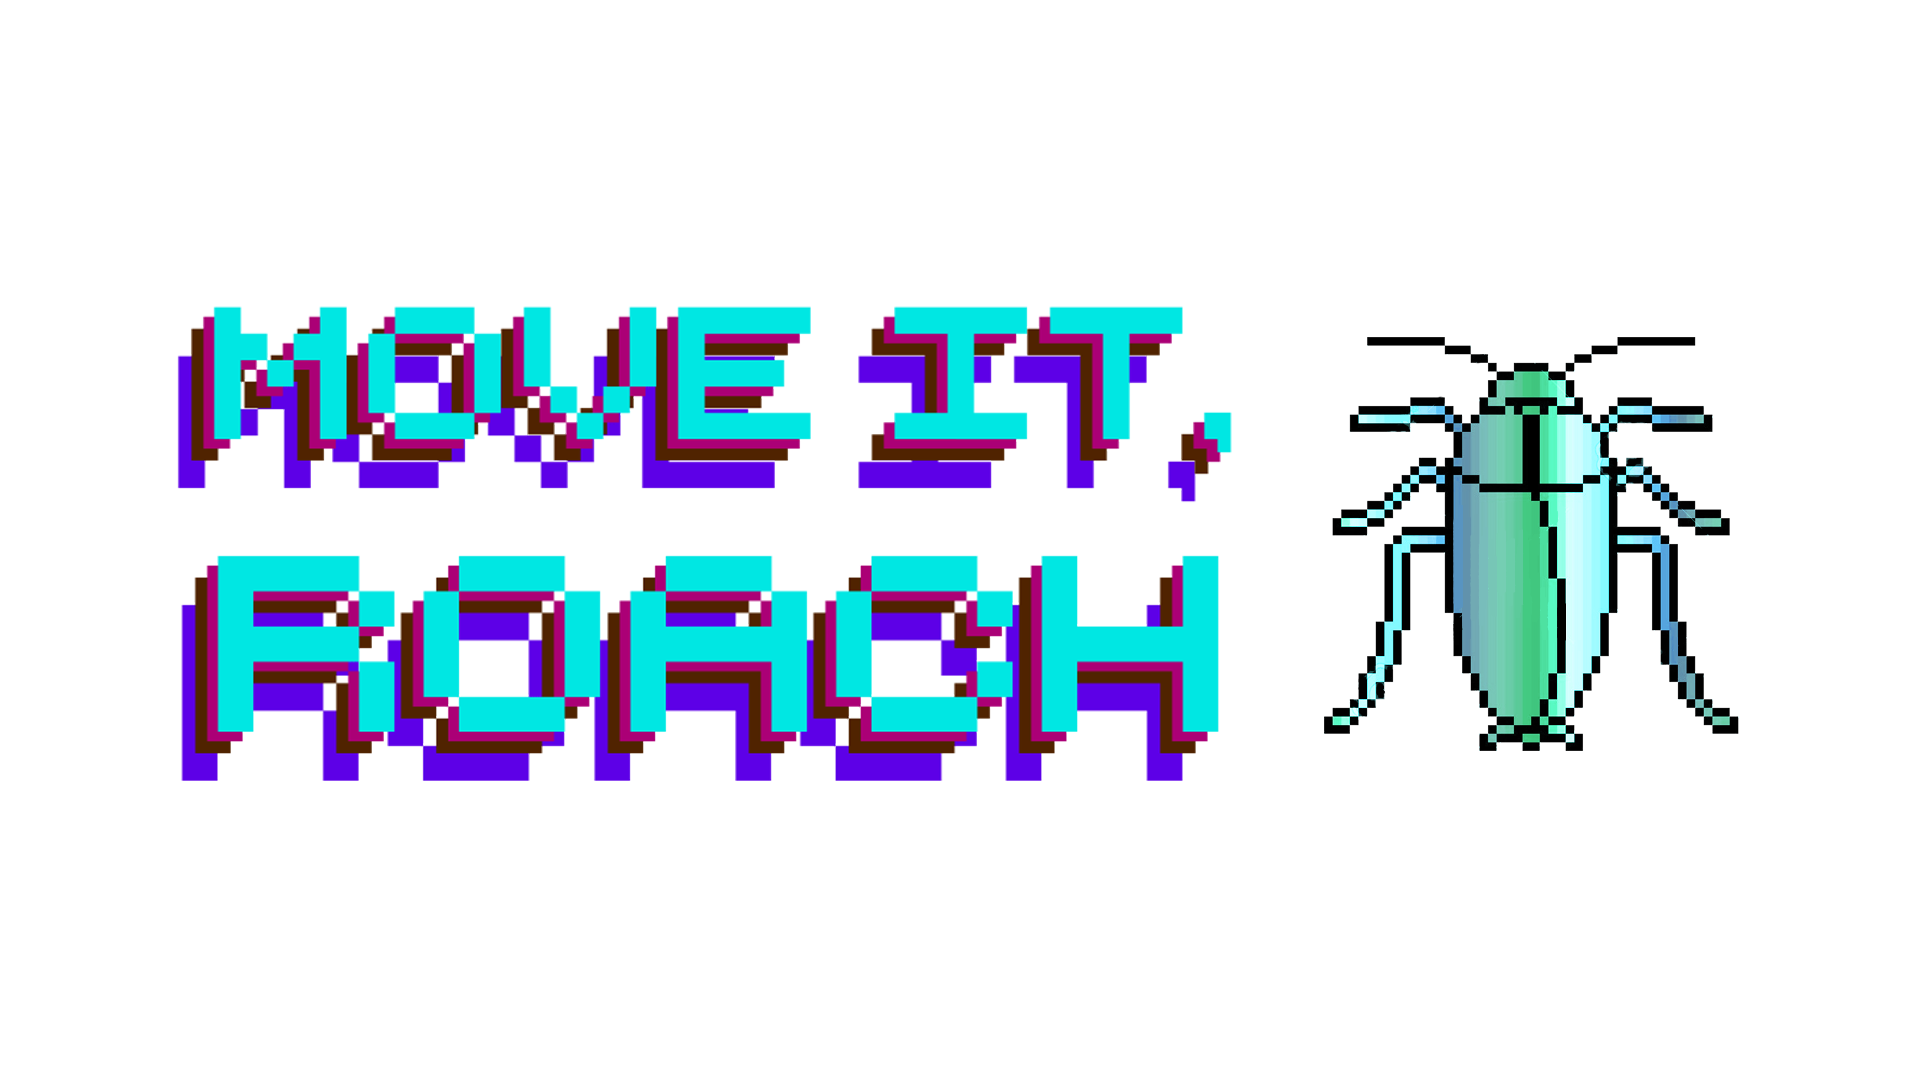 Move it, Roach